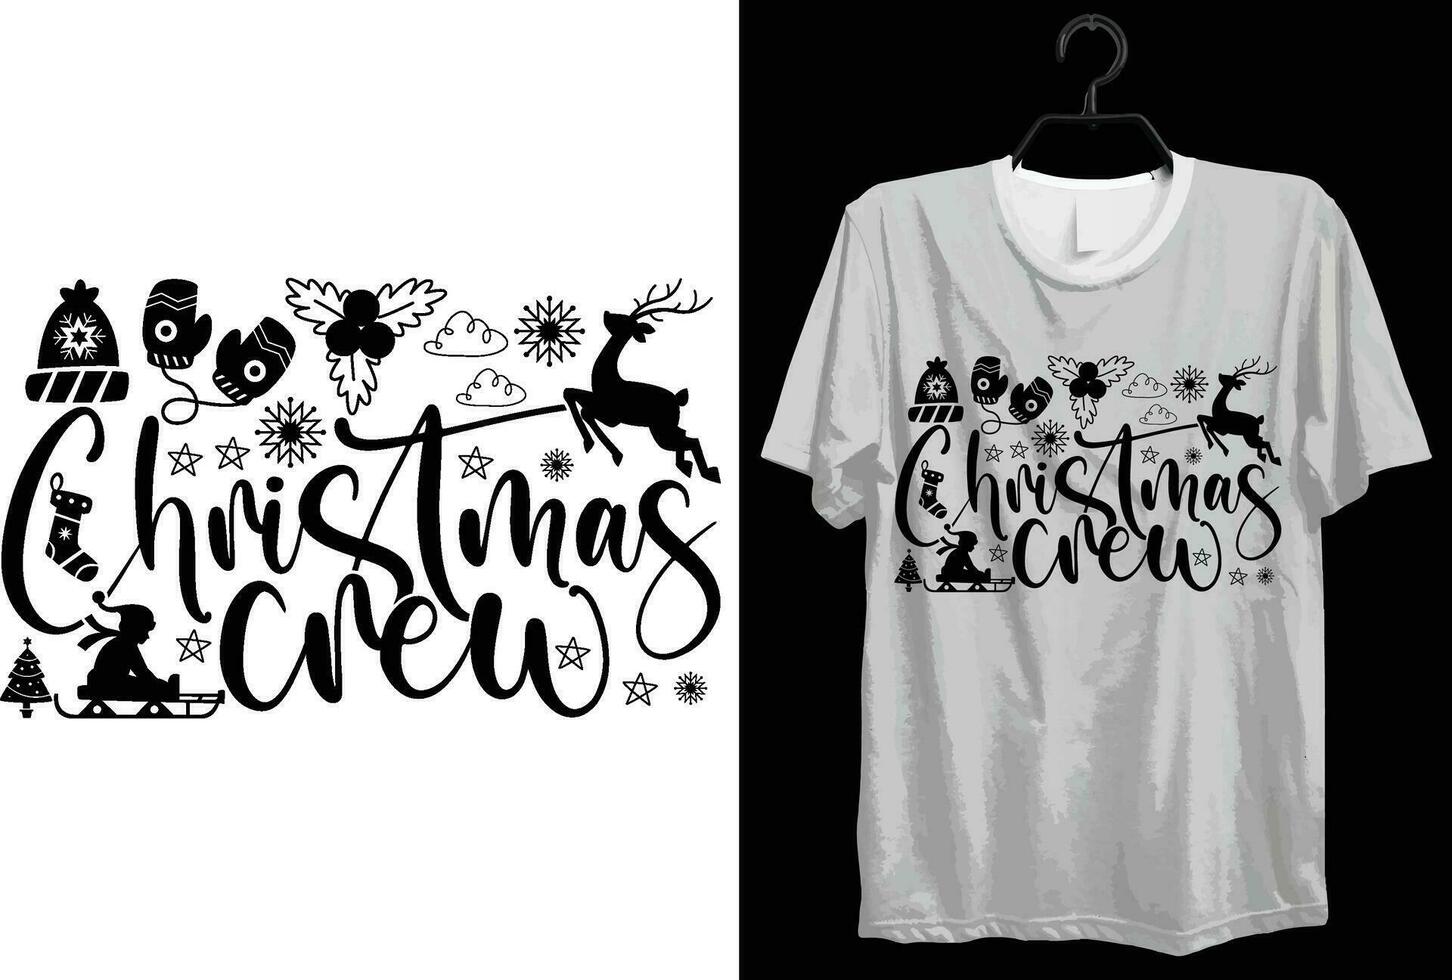 Christmas Crew. Funny Gift Item Merry Christmas T-shirt Design For Christmas Lovers. vector